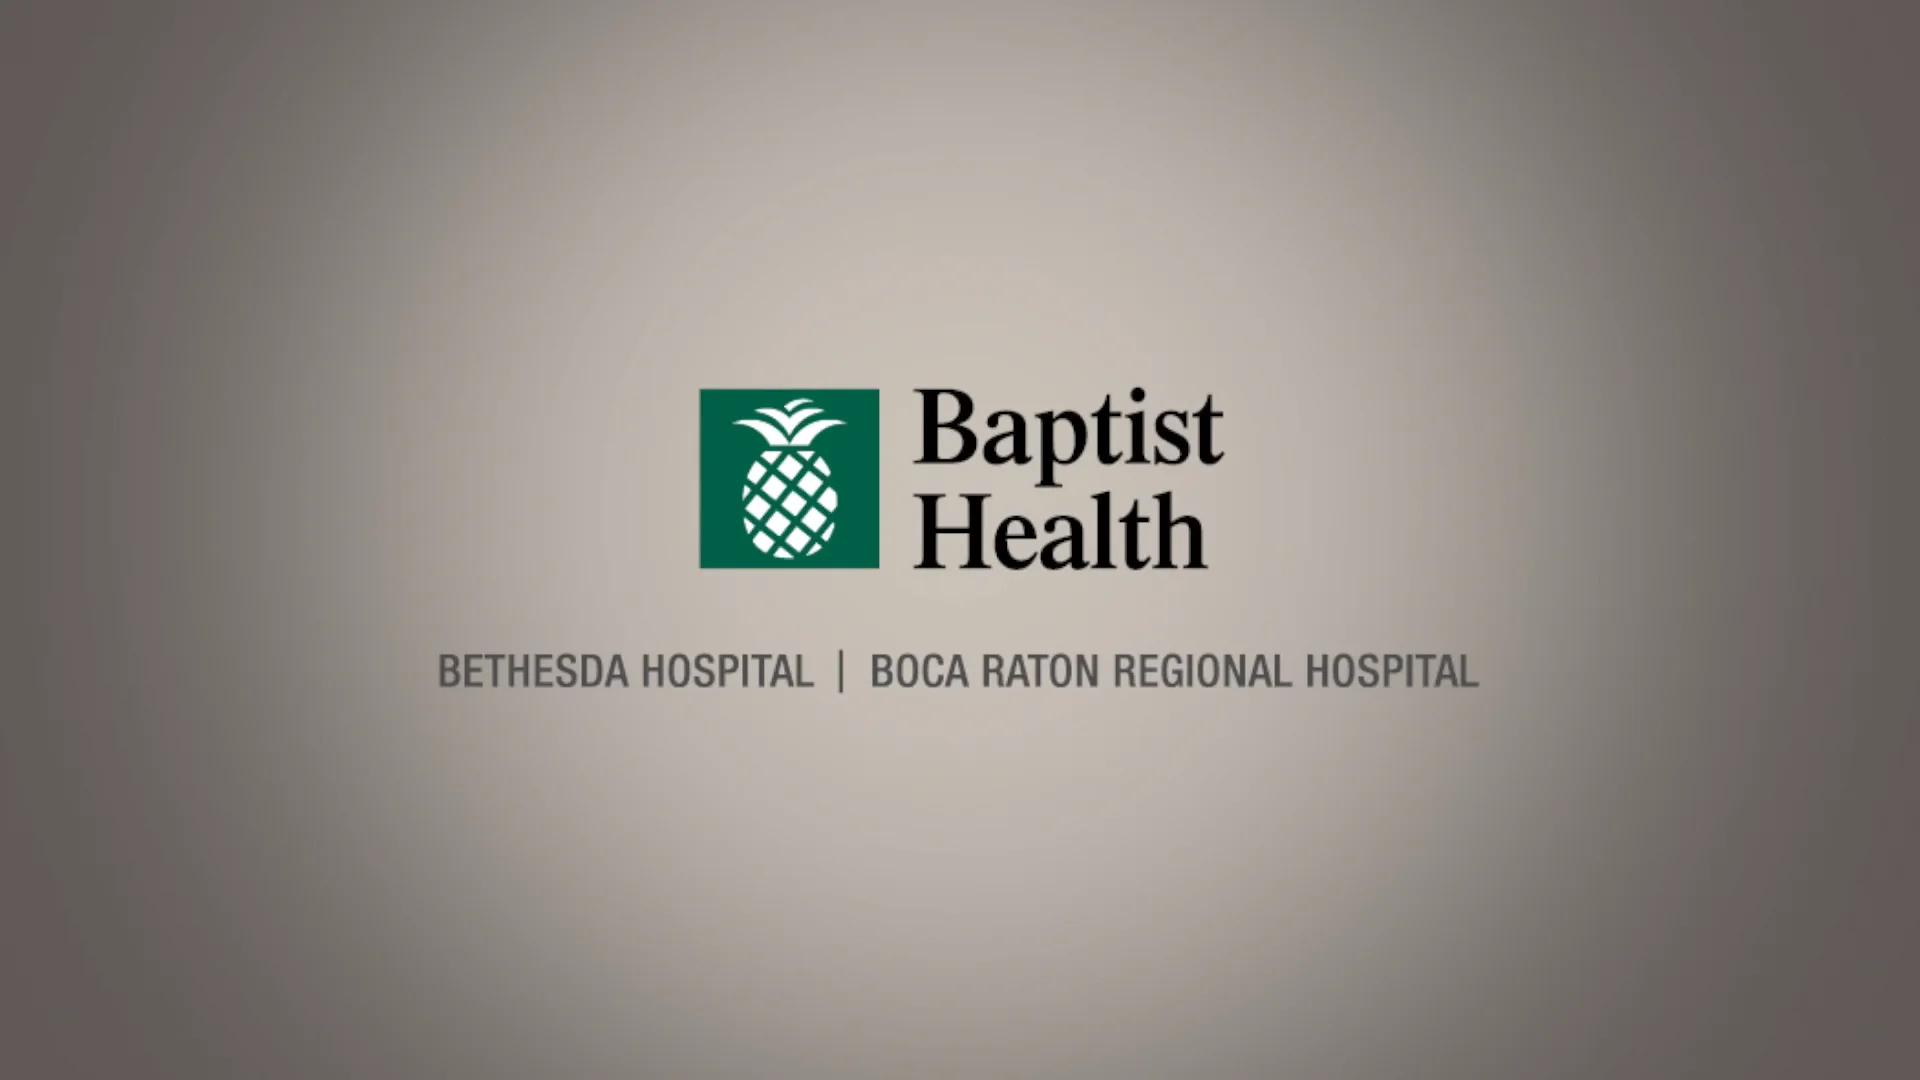 Bethesda Hospital Blum Pavilion Giving Society on Vimeo